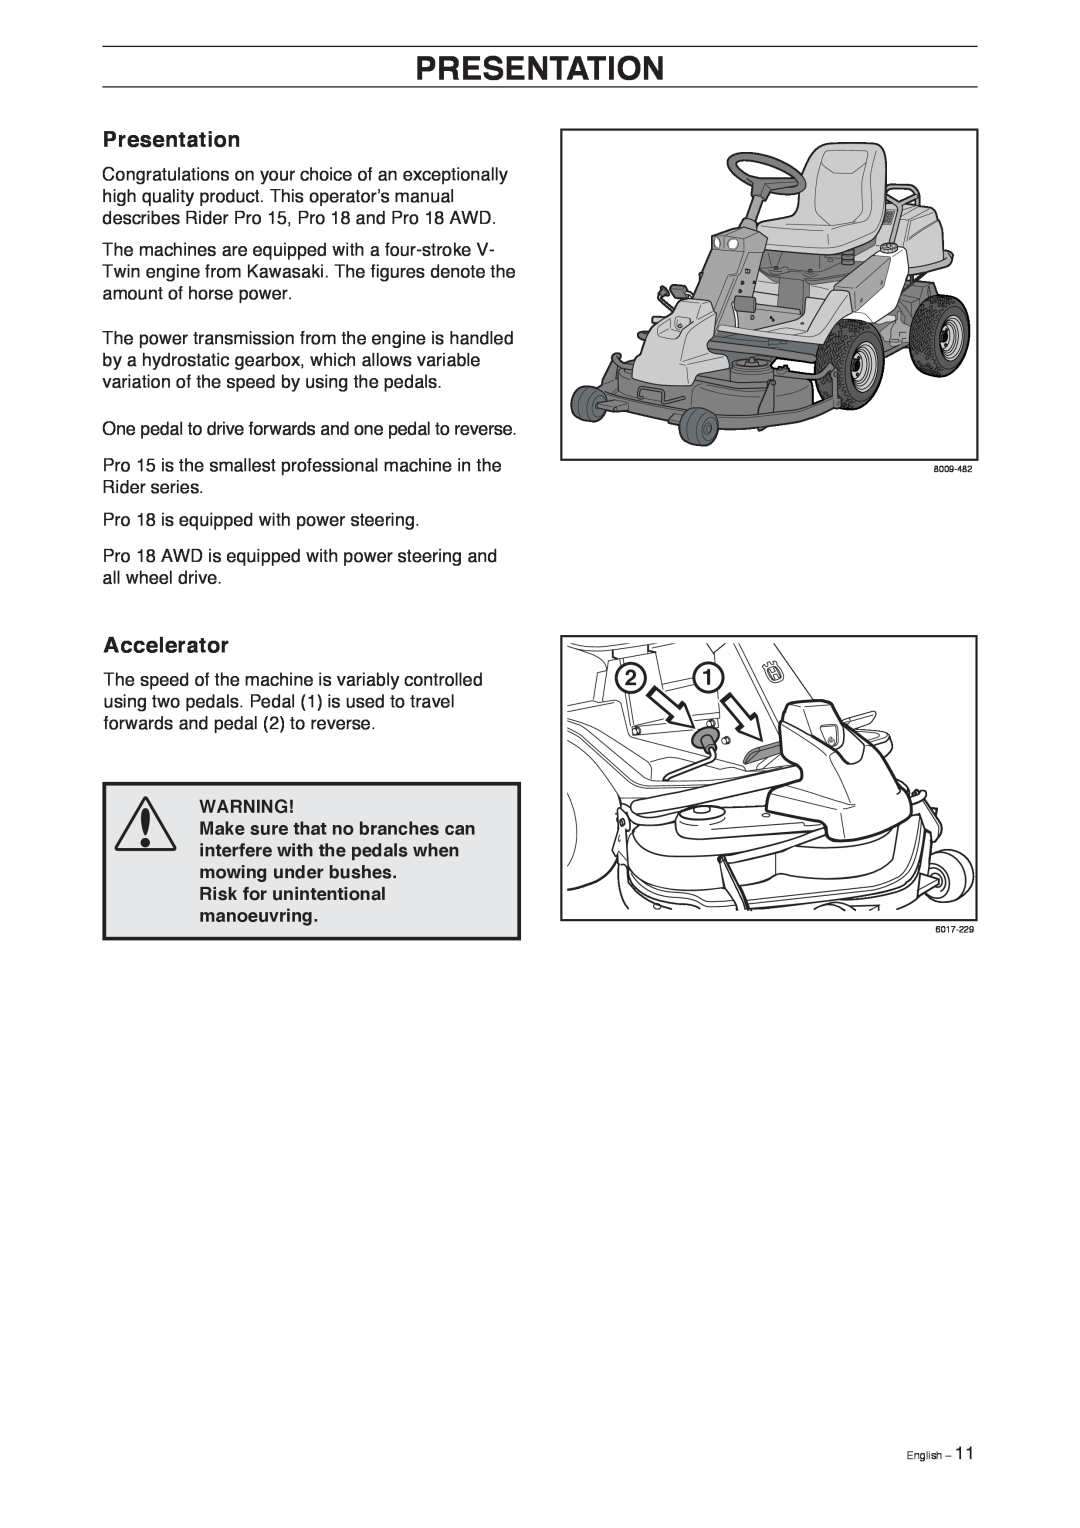 Husqvarna Pro 18 AWD manual Presentation, Accelerator 